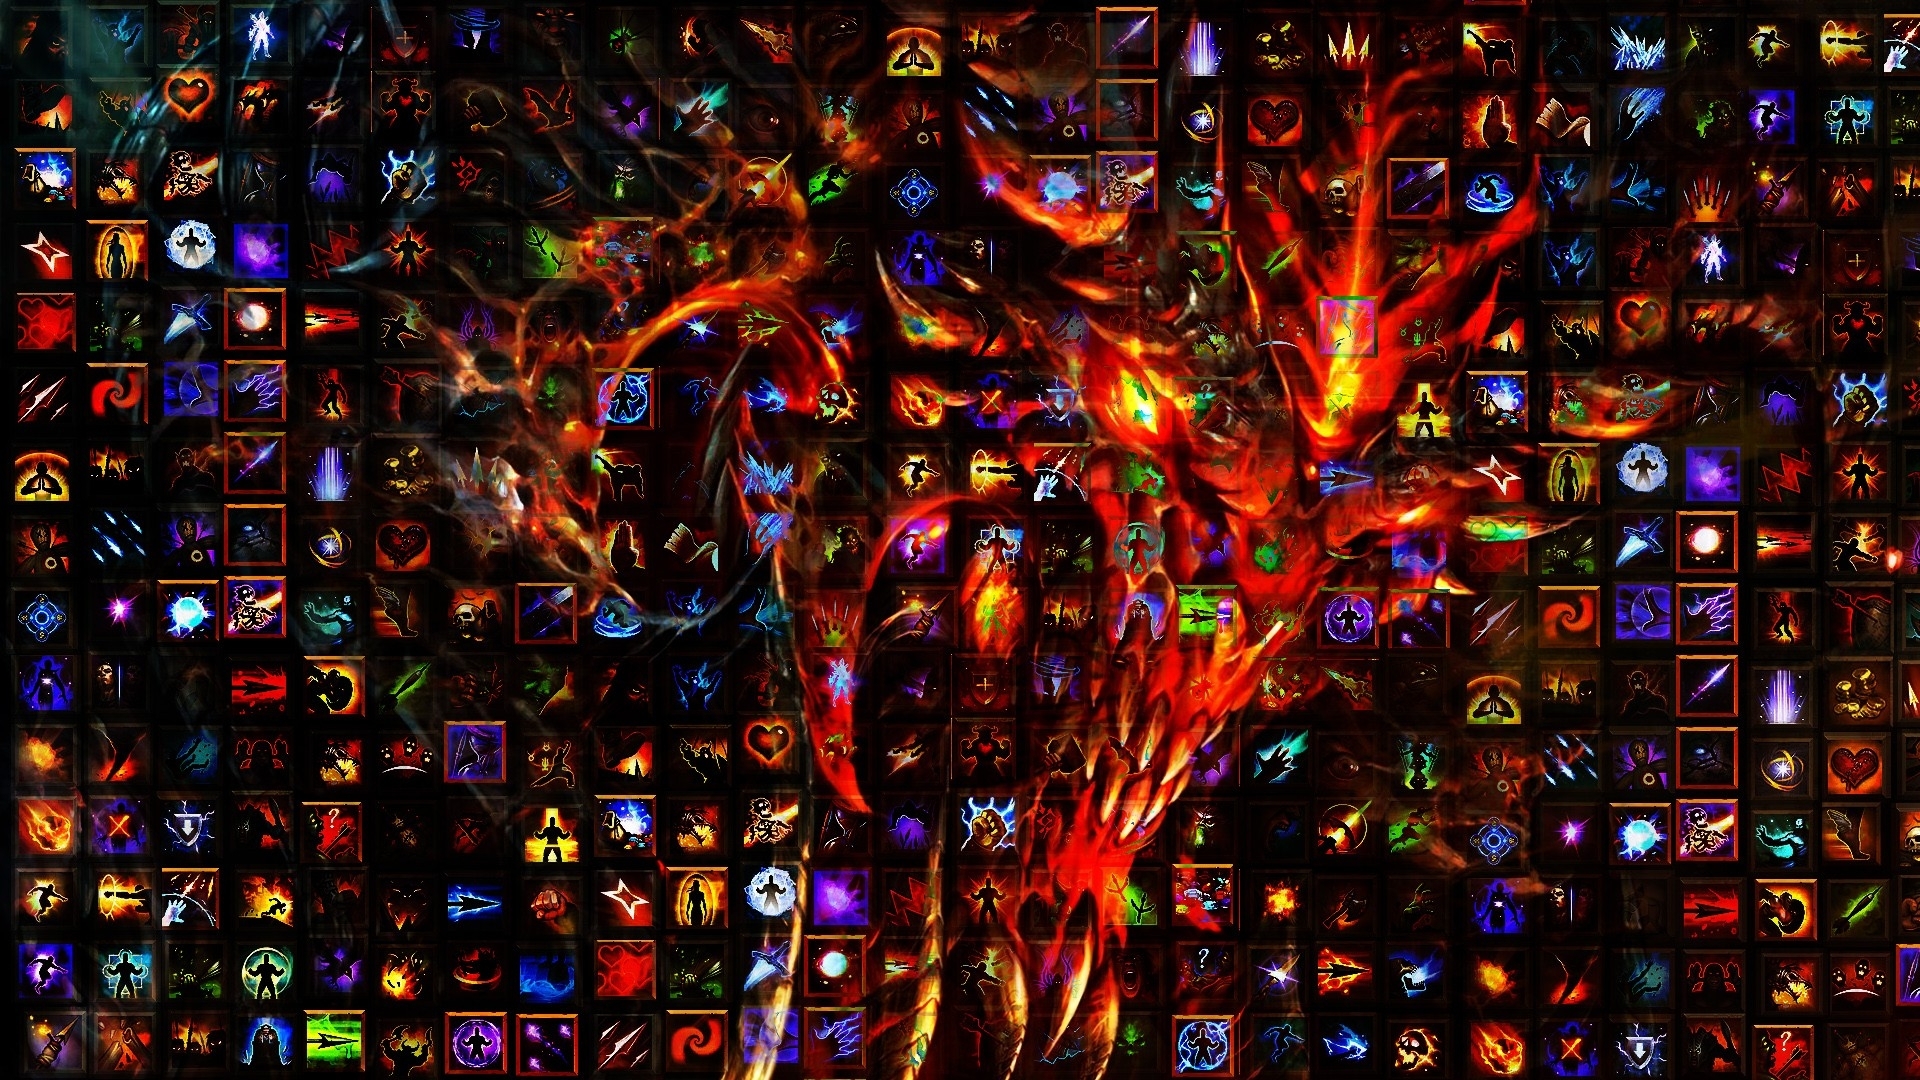 HDq Cover Blizzard Image Wallpaper For Desktop